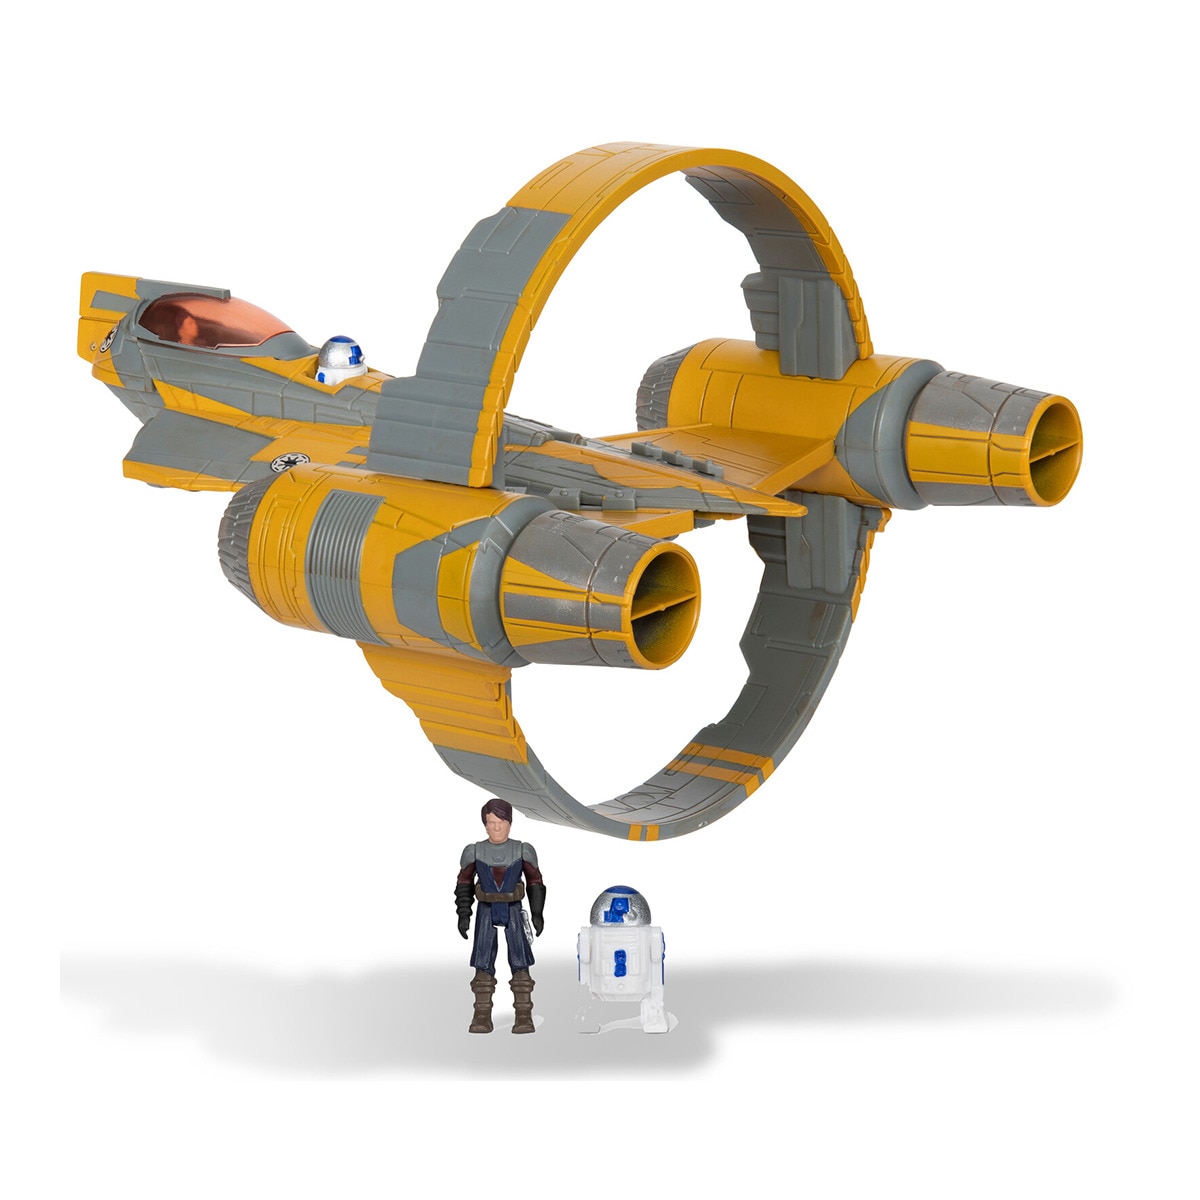 Star Wars - Playset Micro Galaxy Squadron Anakin Skywalker's Jedi Starfighter Star Wars.